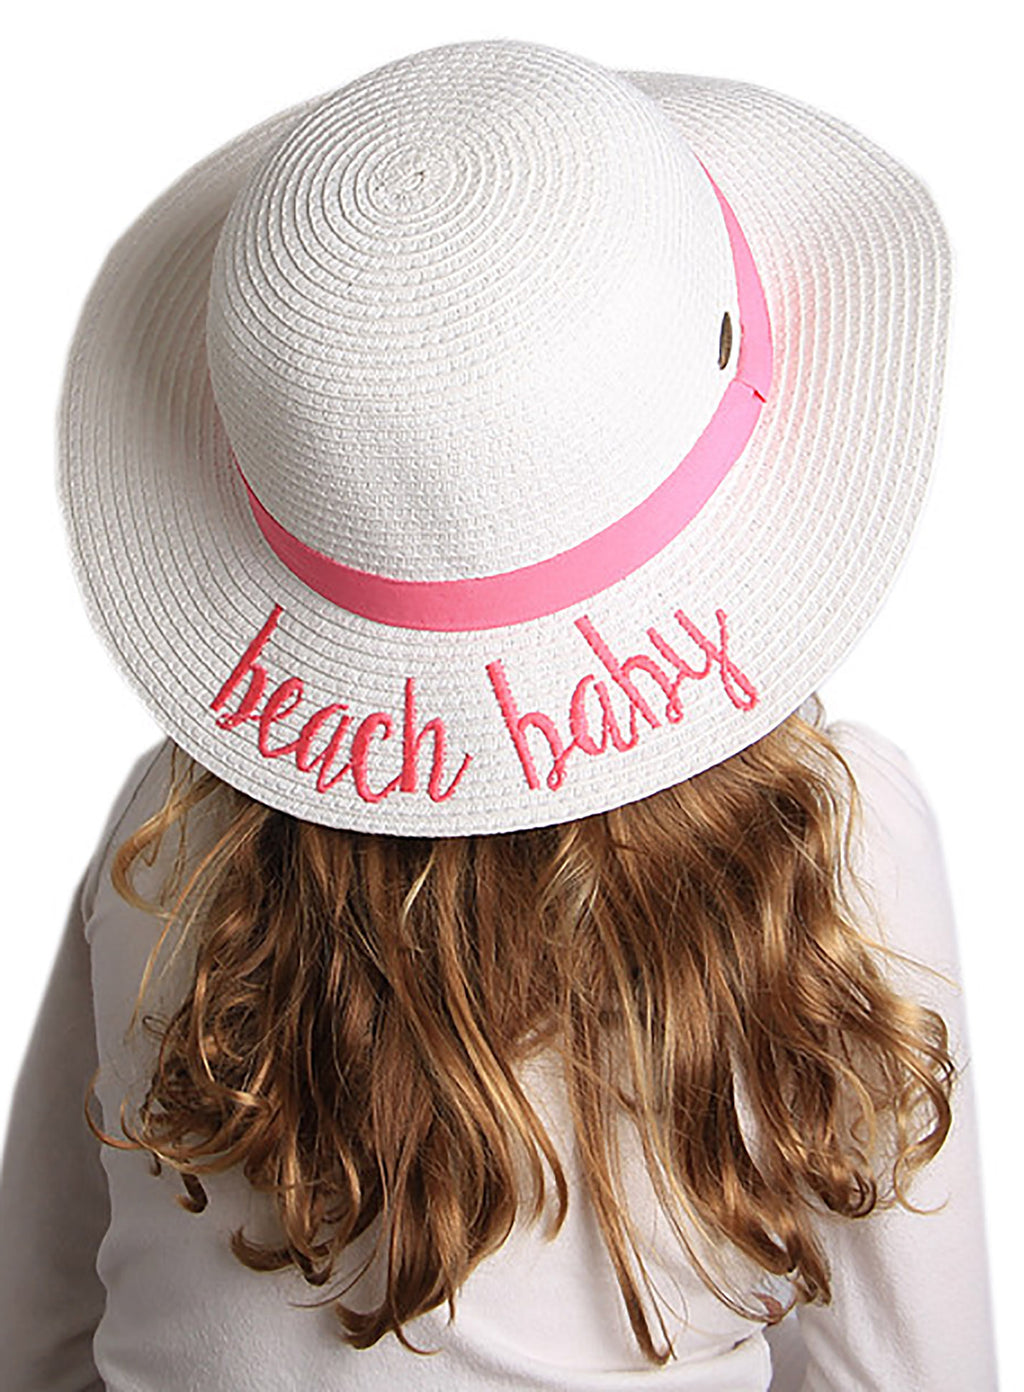 Kid's Sun Hat - Beach Baby